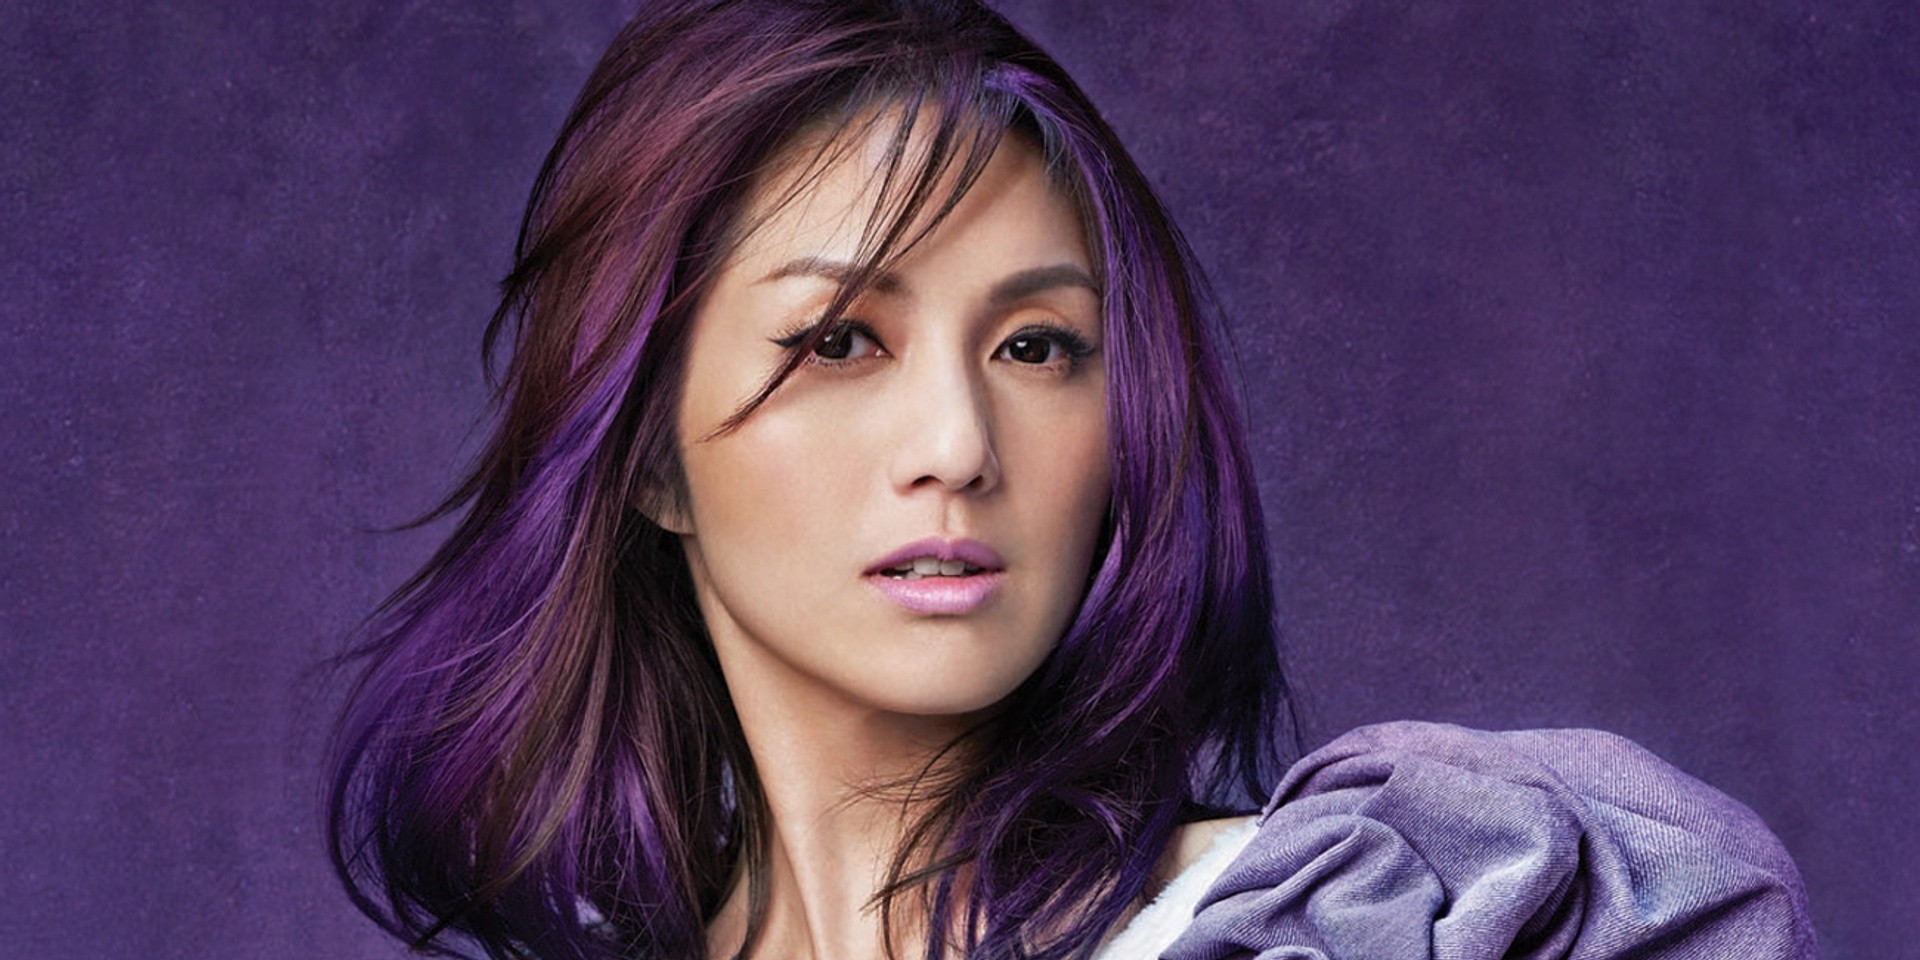 Miriam Yeung's Singapore concert postponed